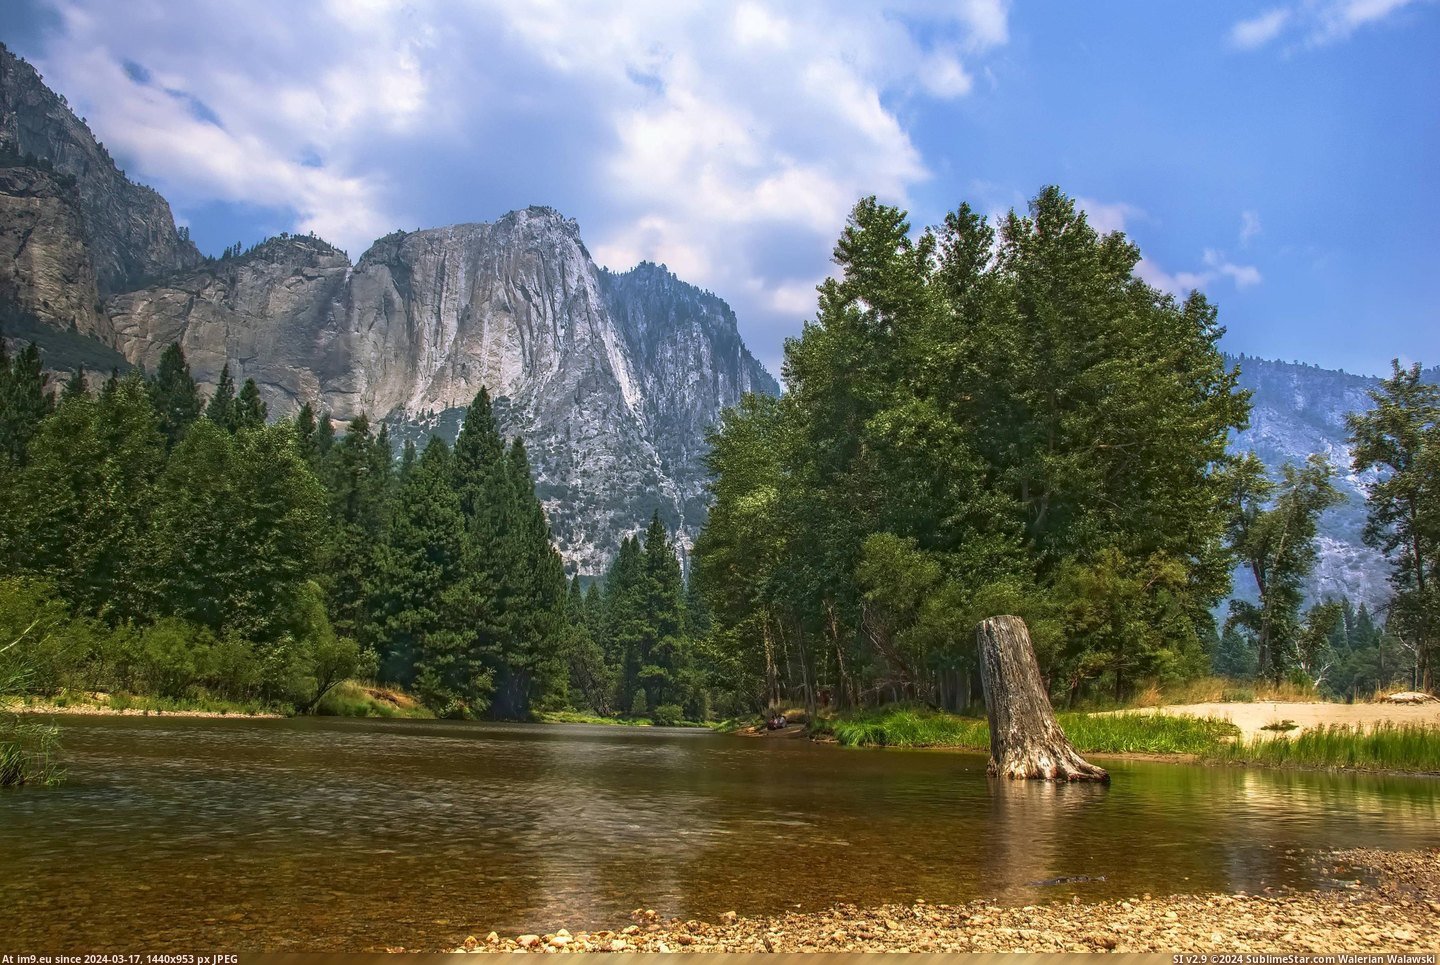 #Park #National #Vacation #Yosemite #Average [Earthporn] Your average Yosemite National Park vacation pic [2867x1910] Pic. (Изображение из альбом My r/EARTHPORN favs))